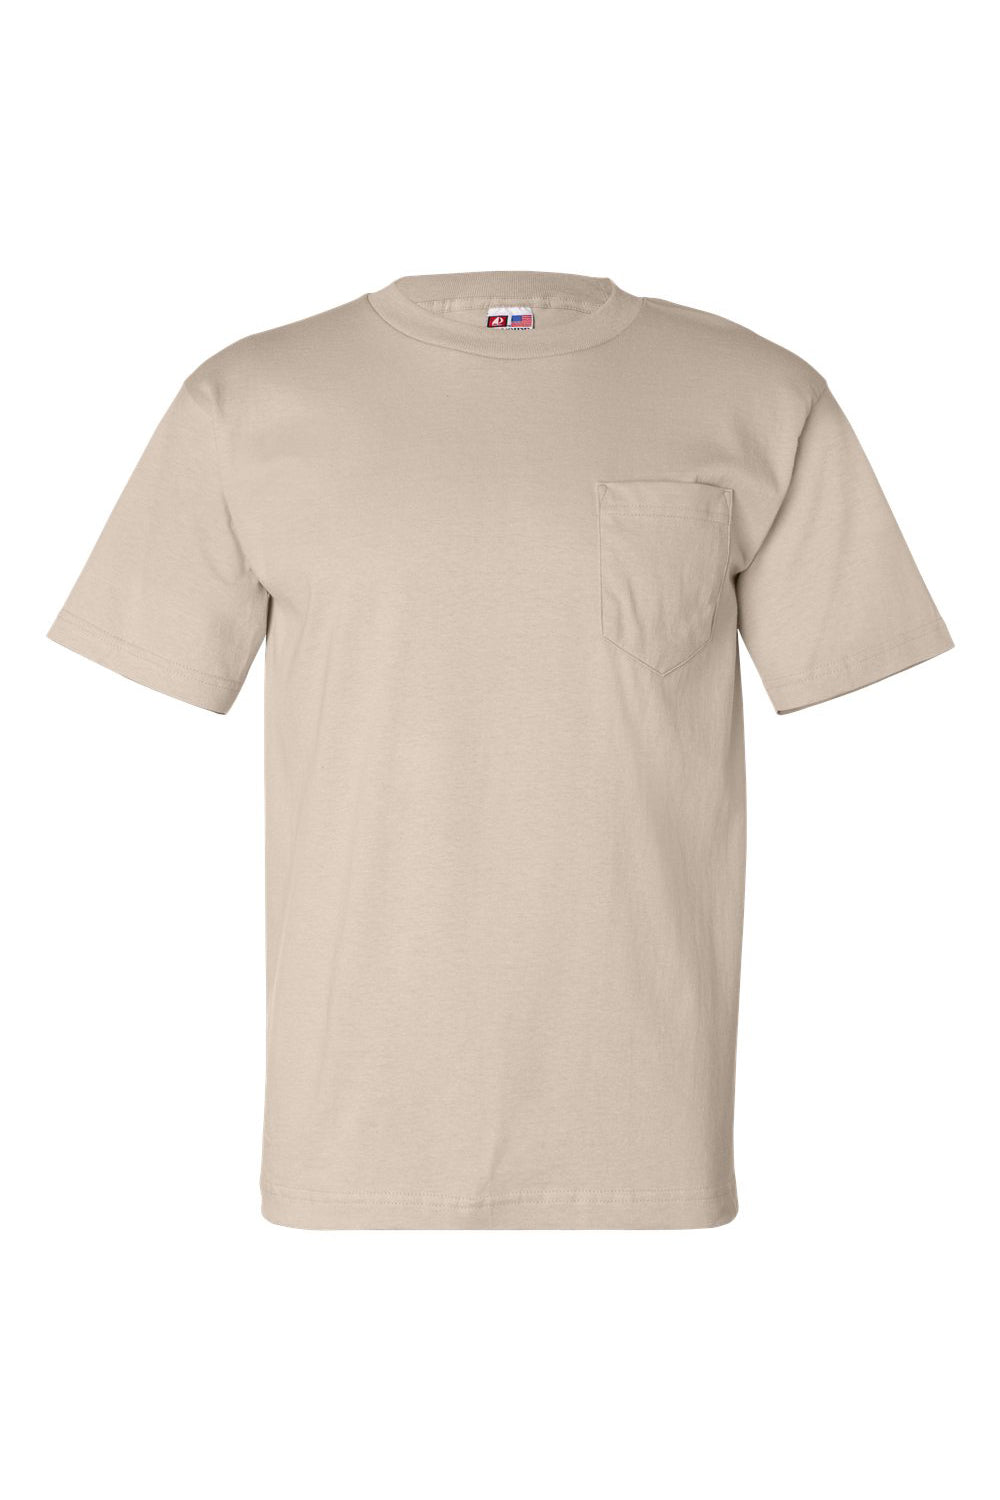 Bayside BA7100 Mens USA Made Short Sleeve Crewneck T-Shirt w/ Pocket Sand Flat Front